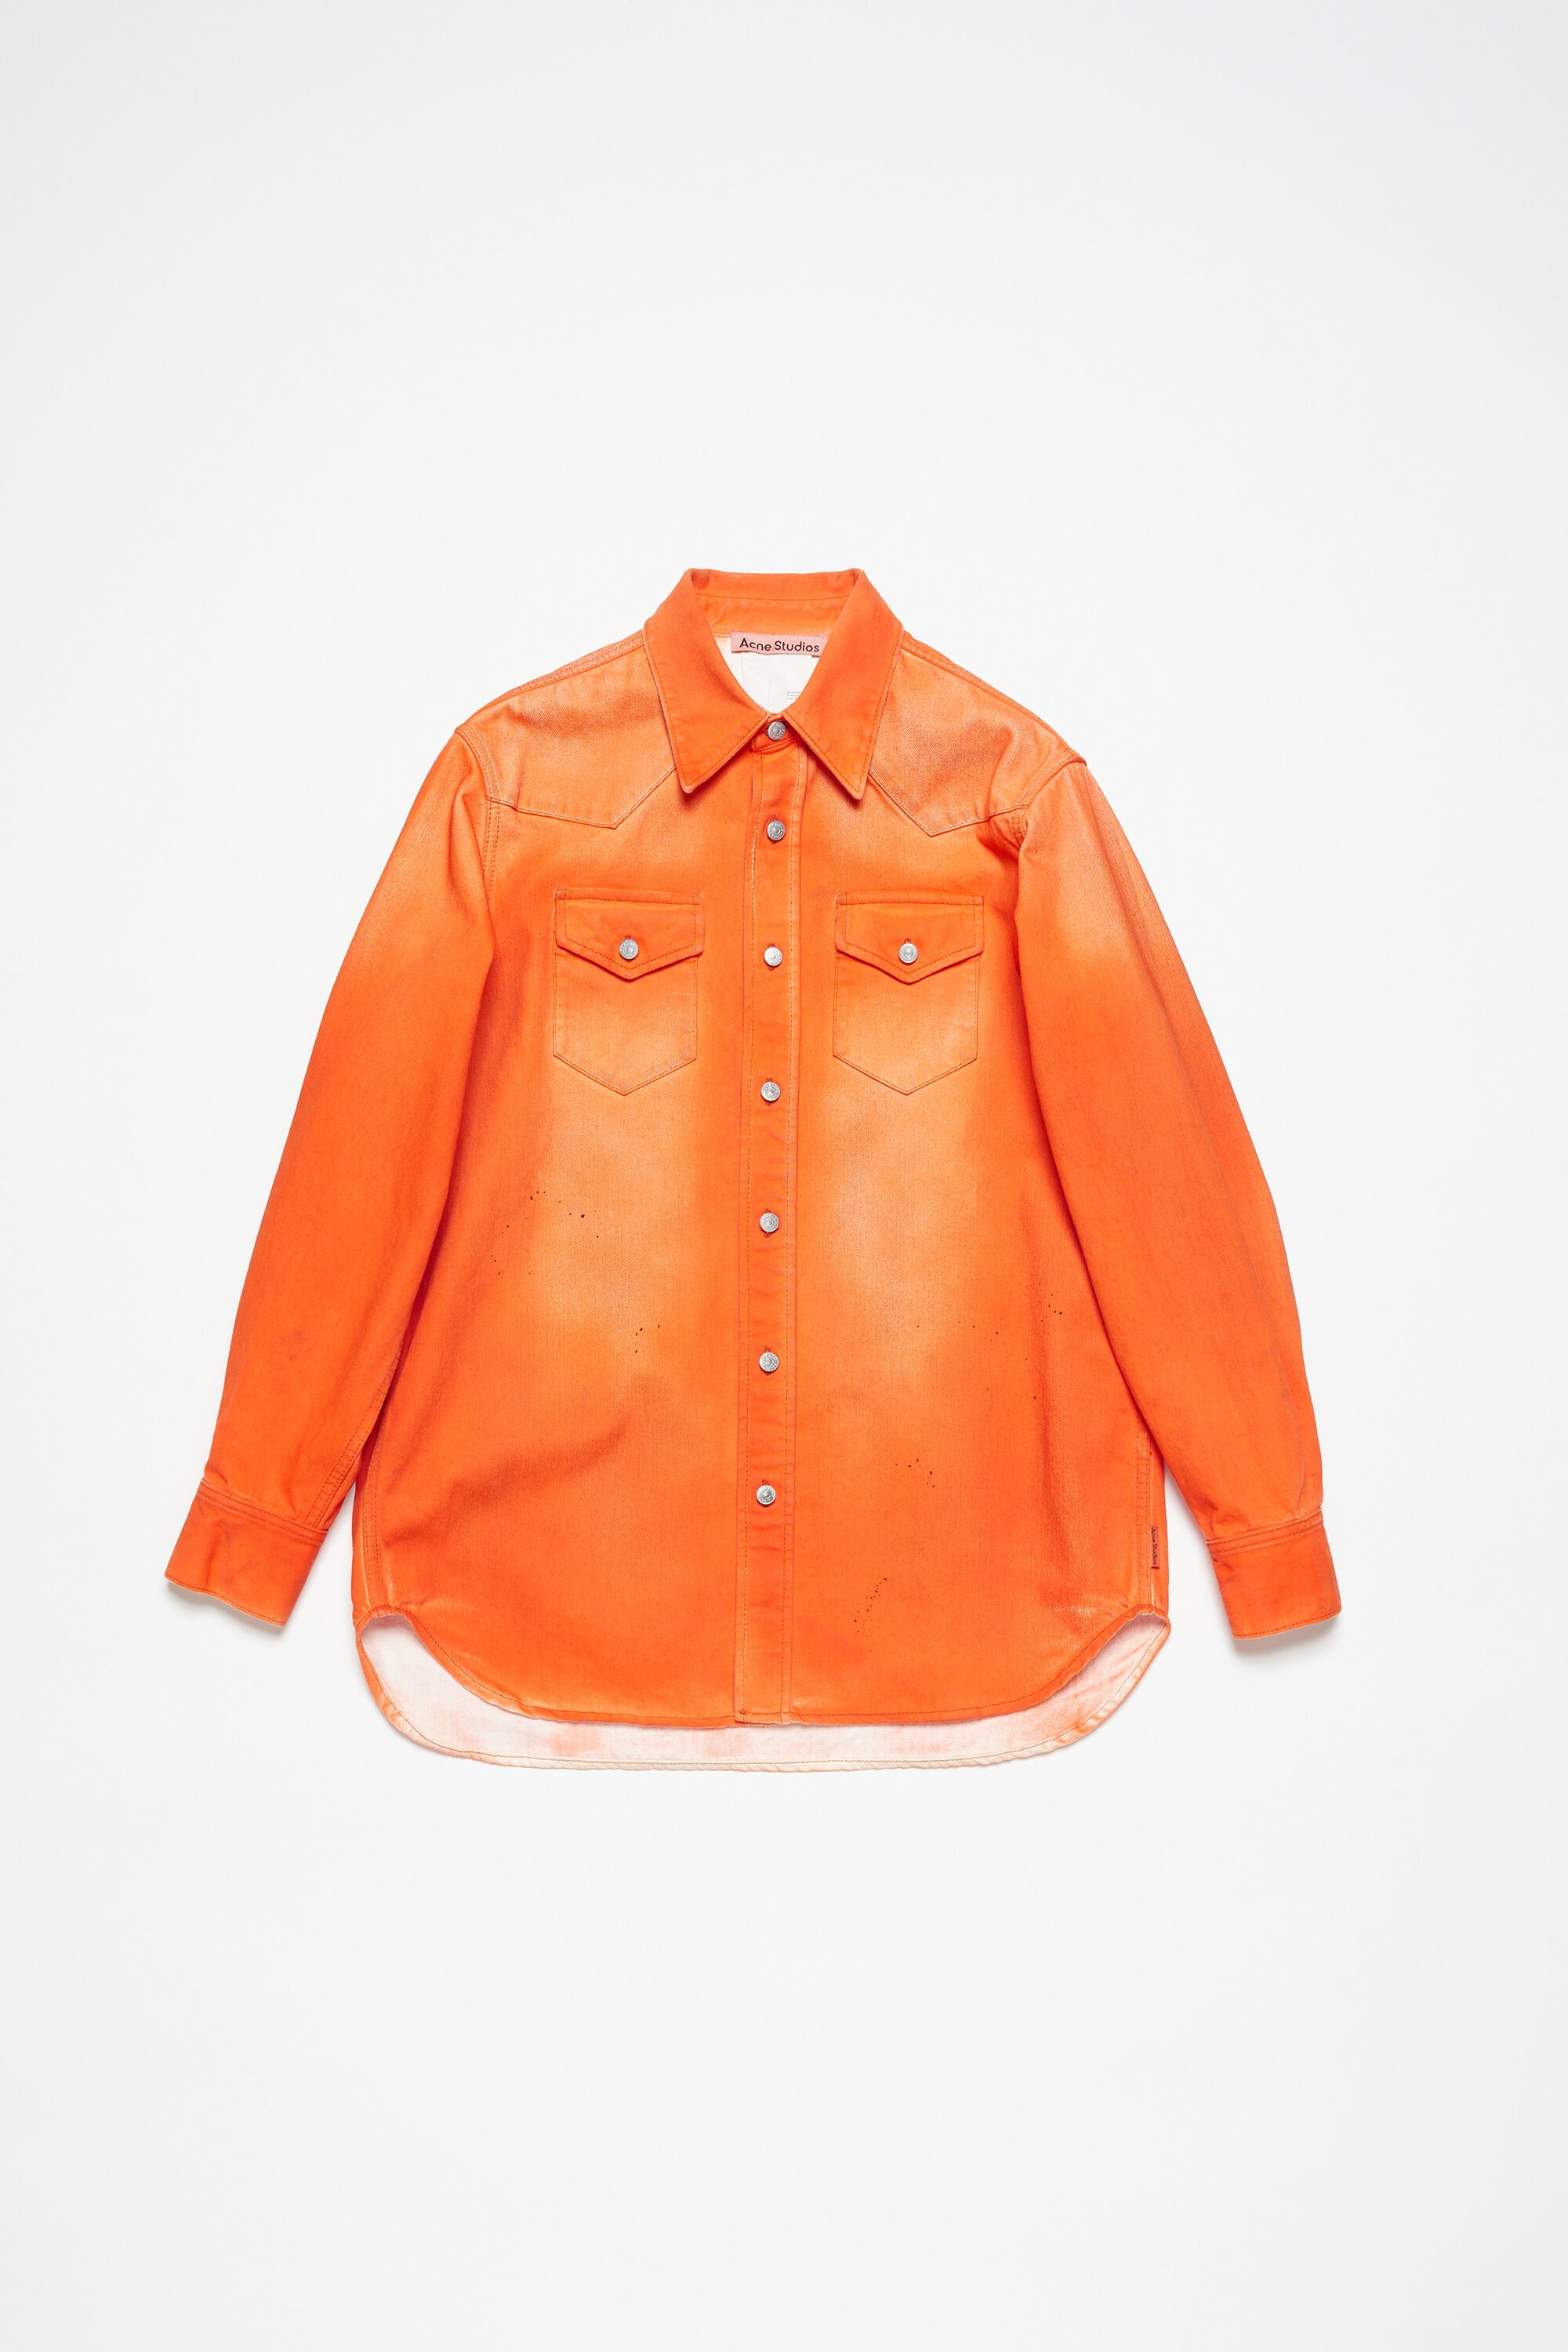 Denim shirt - Relaxed fit - Neon orange - 6